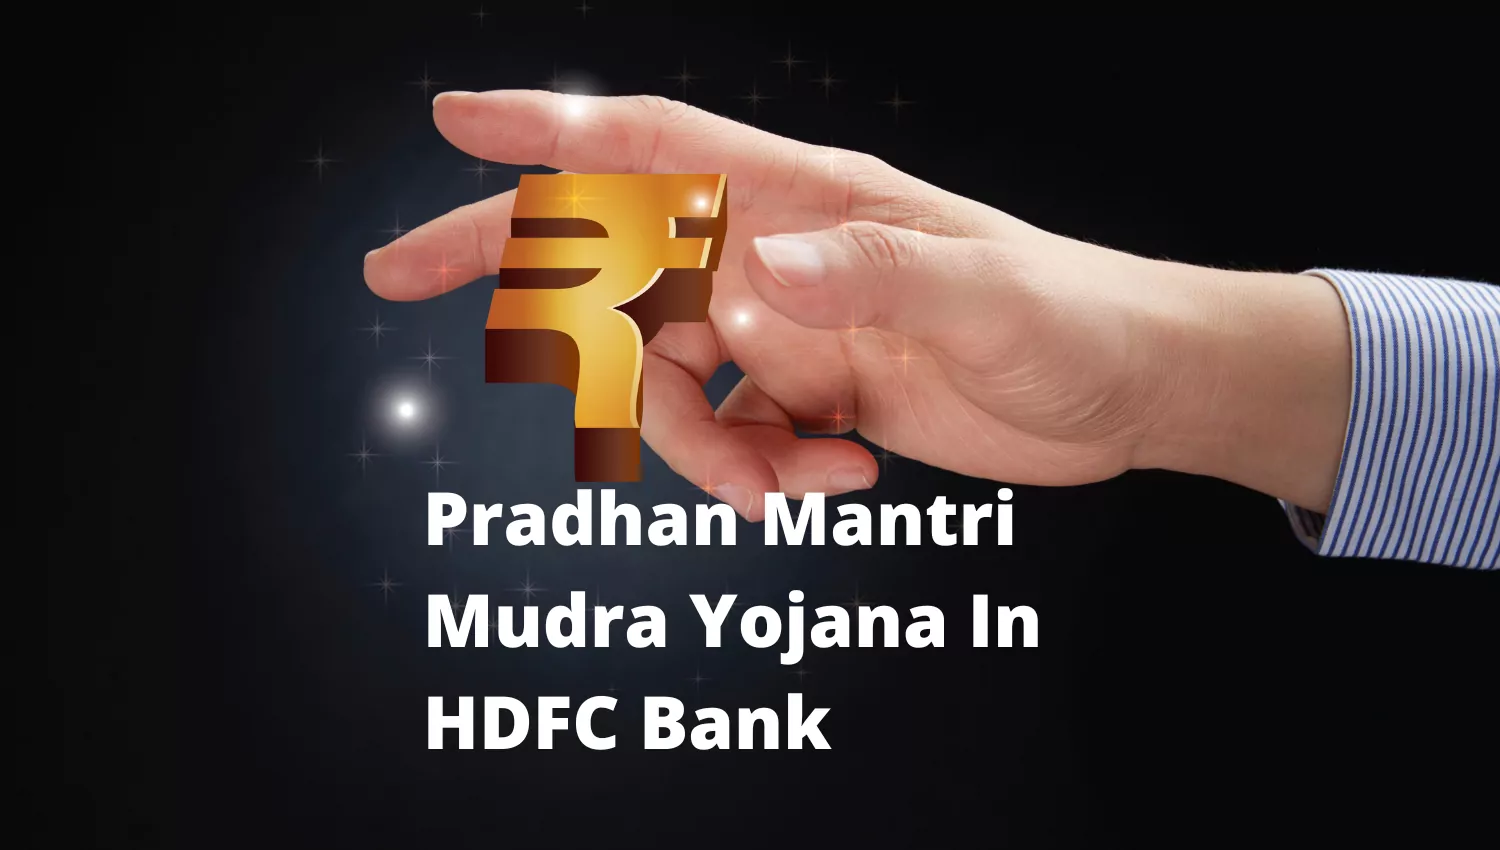 Pradhan Mantri Mudra Yojana In HDFC Bank